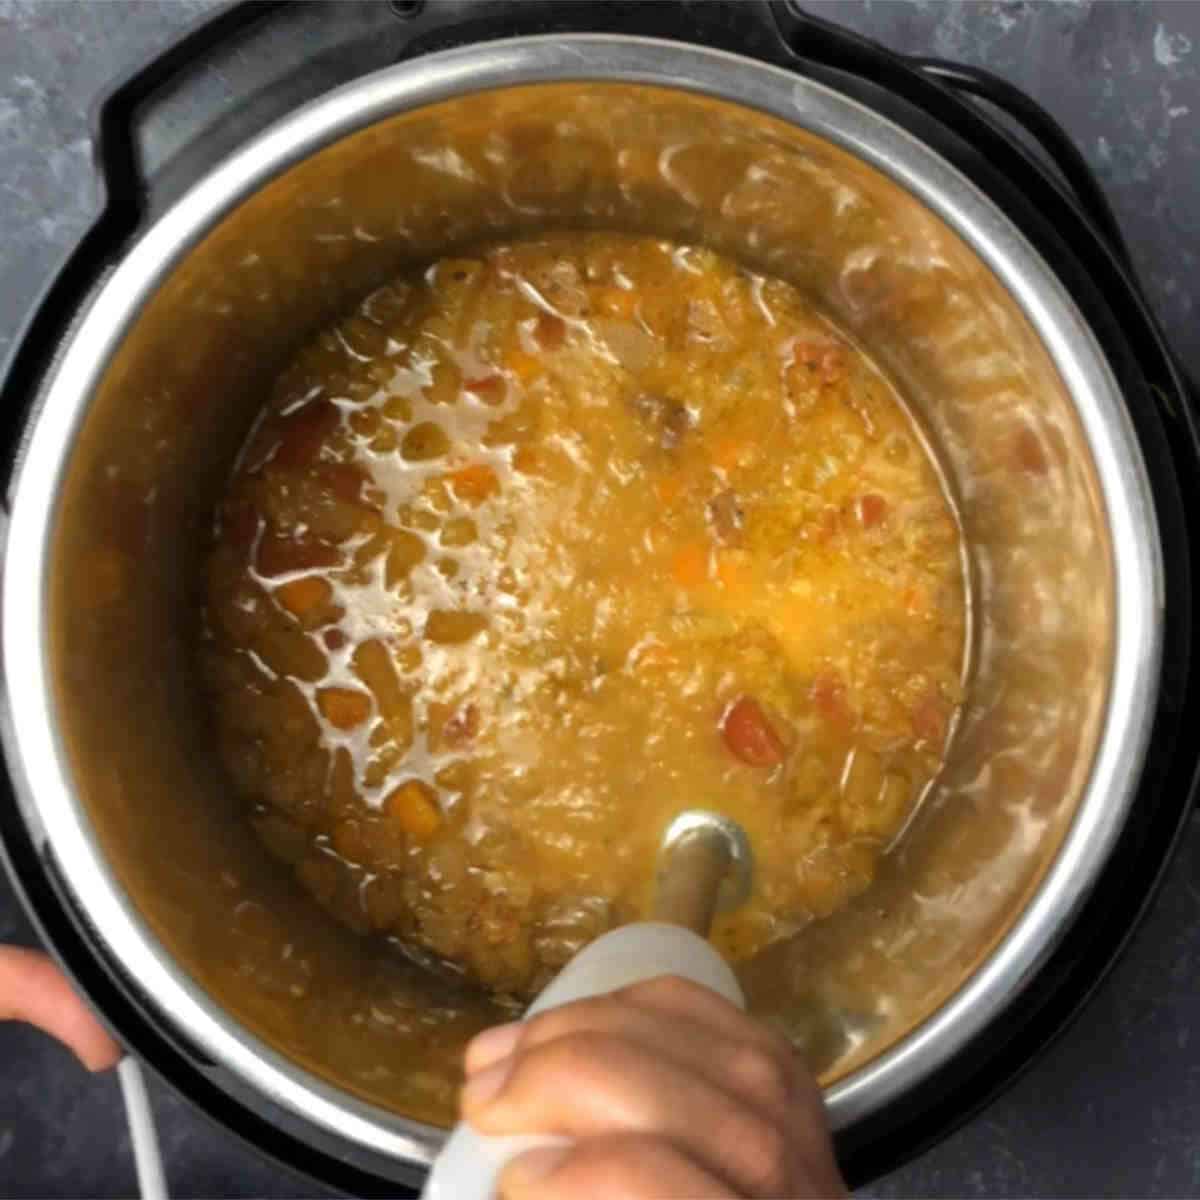 blend into chunky soup.